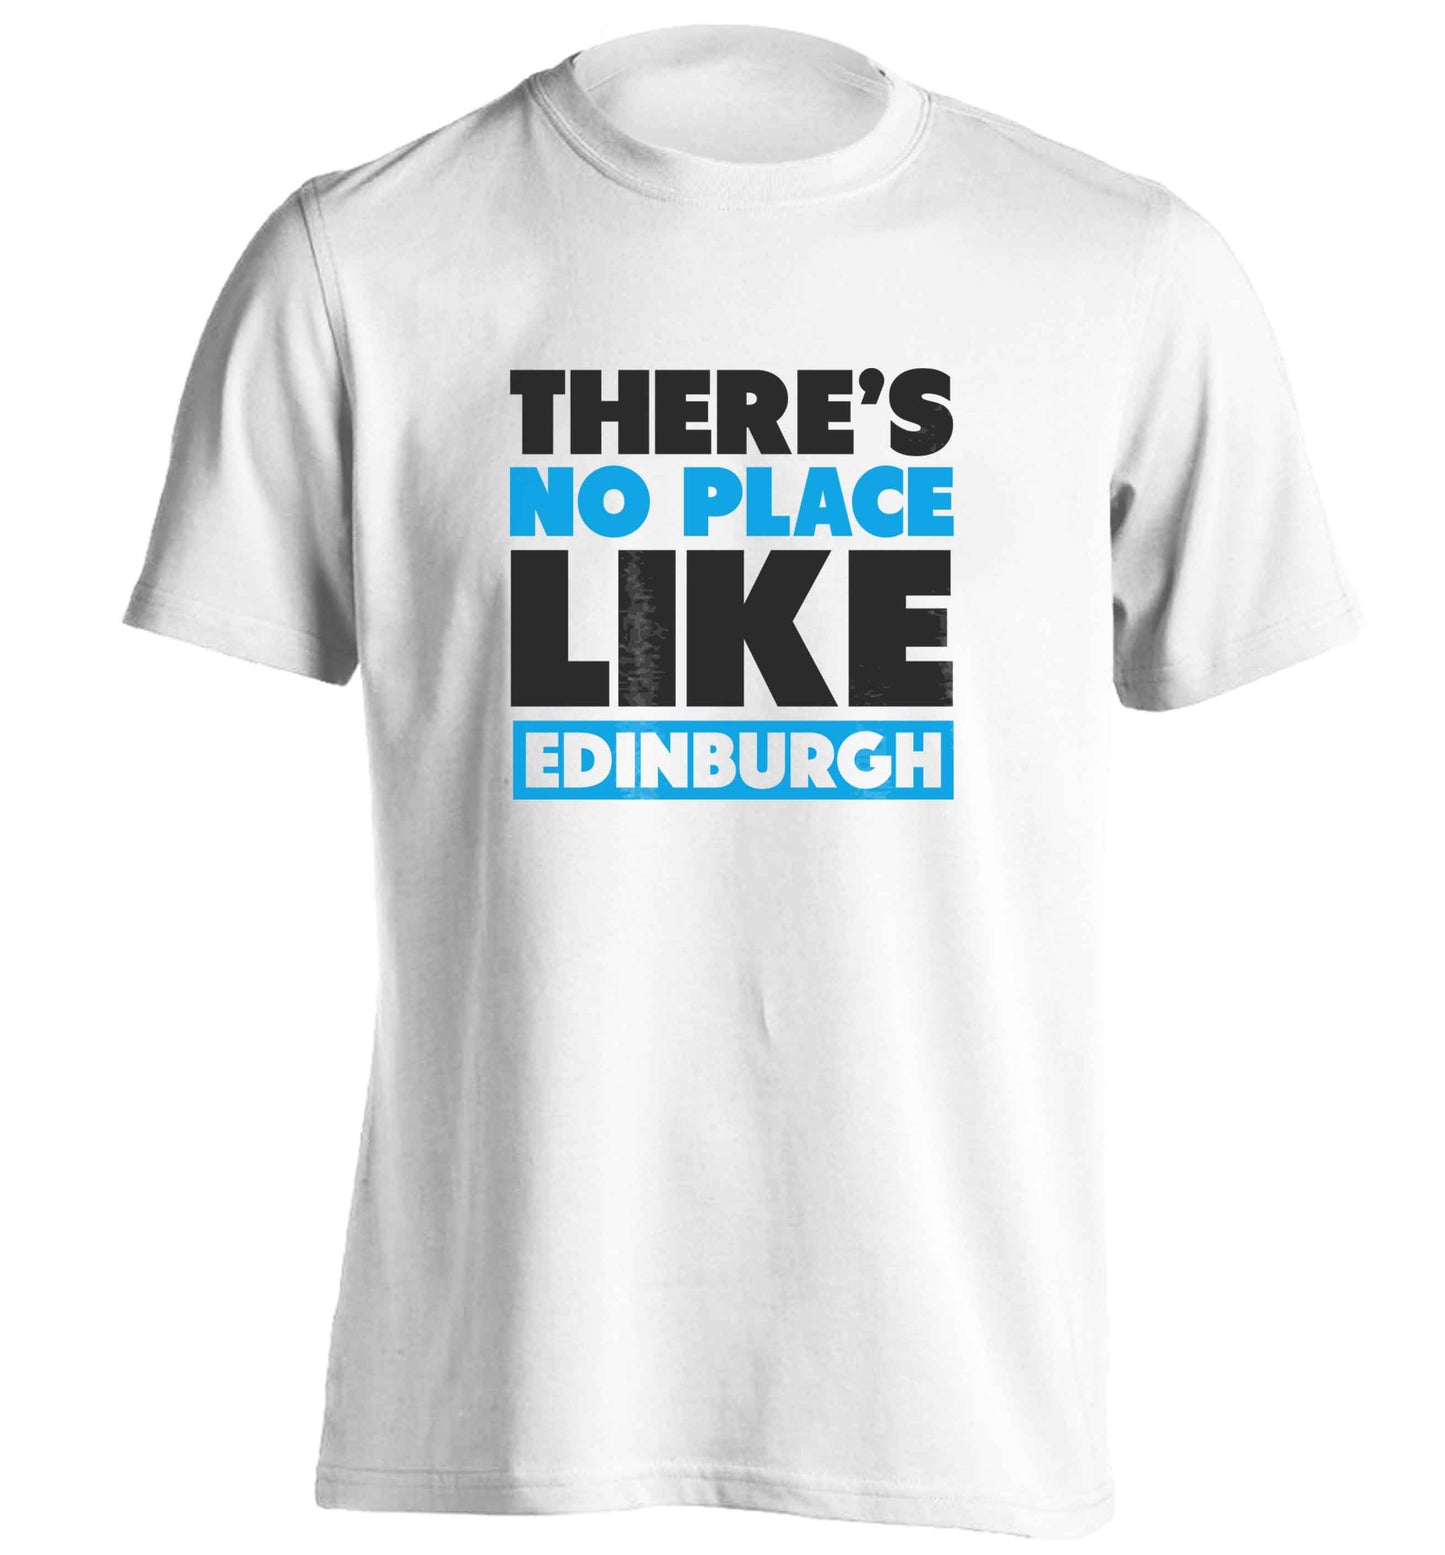 There's no place like Edinburgh adults unisex white Tshirt 2XL